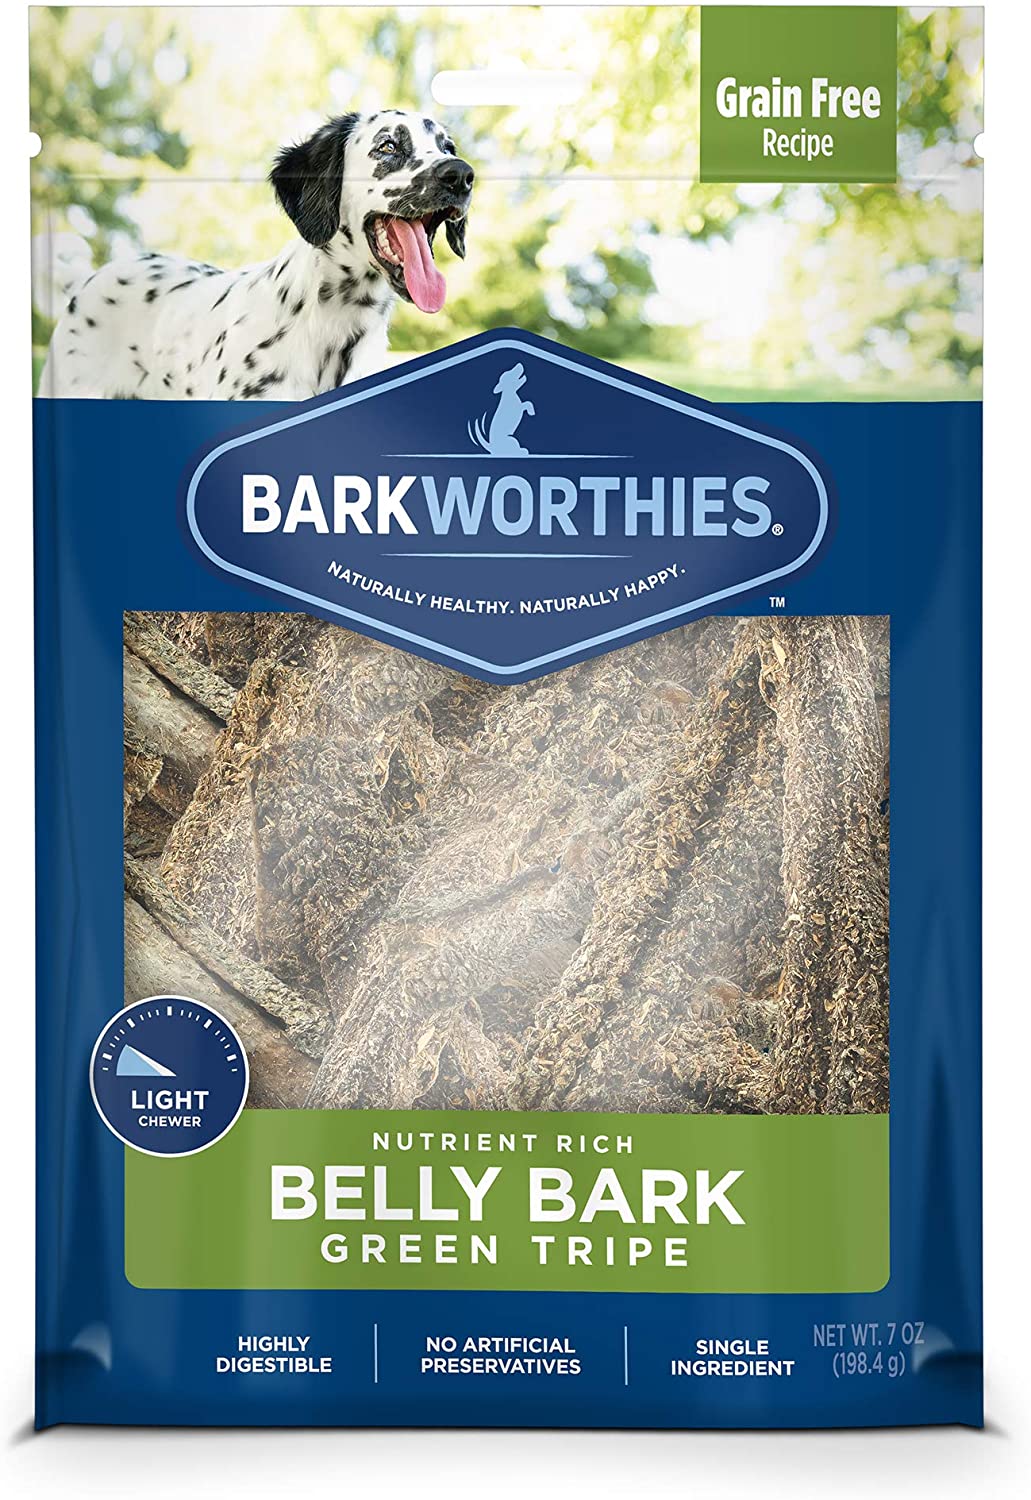 Barkworthies Dog Green Tripe Belly Bark 7oz